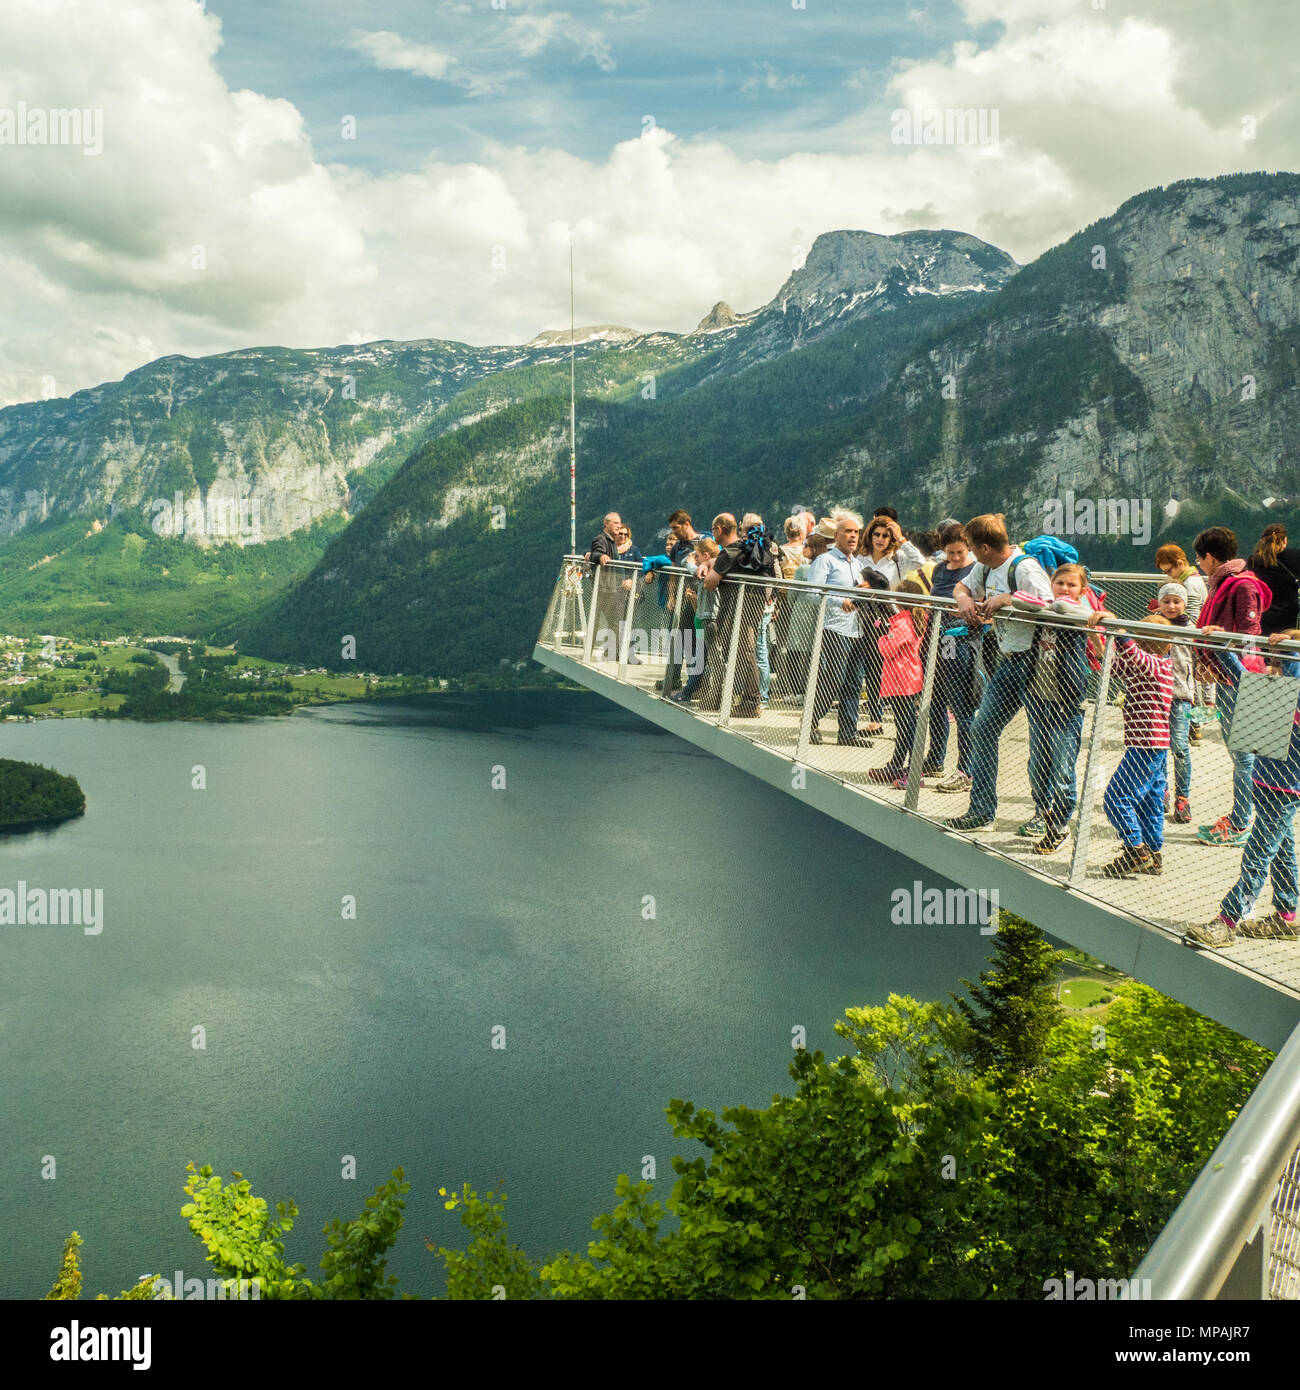 Skywalk viewing platform overlooking lake Hallstatt in Austria's Salzkammergut (Lake District) region. Stock Photo